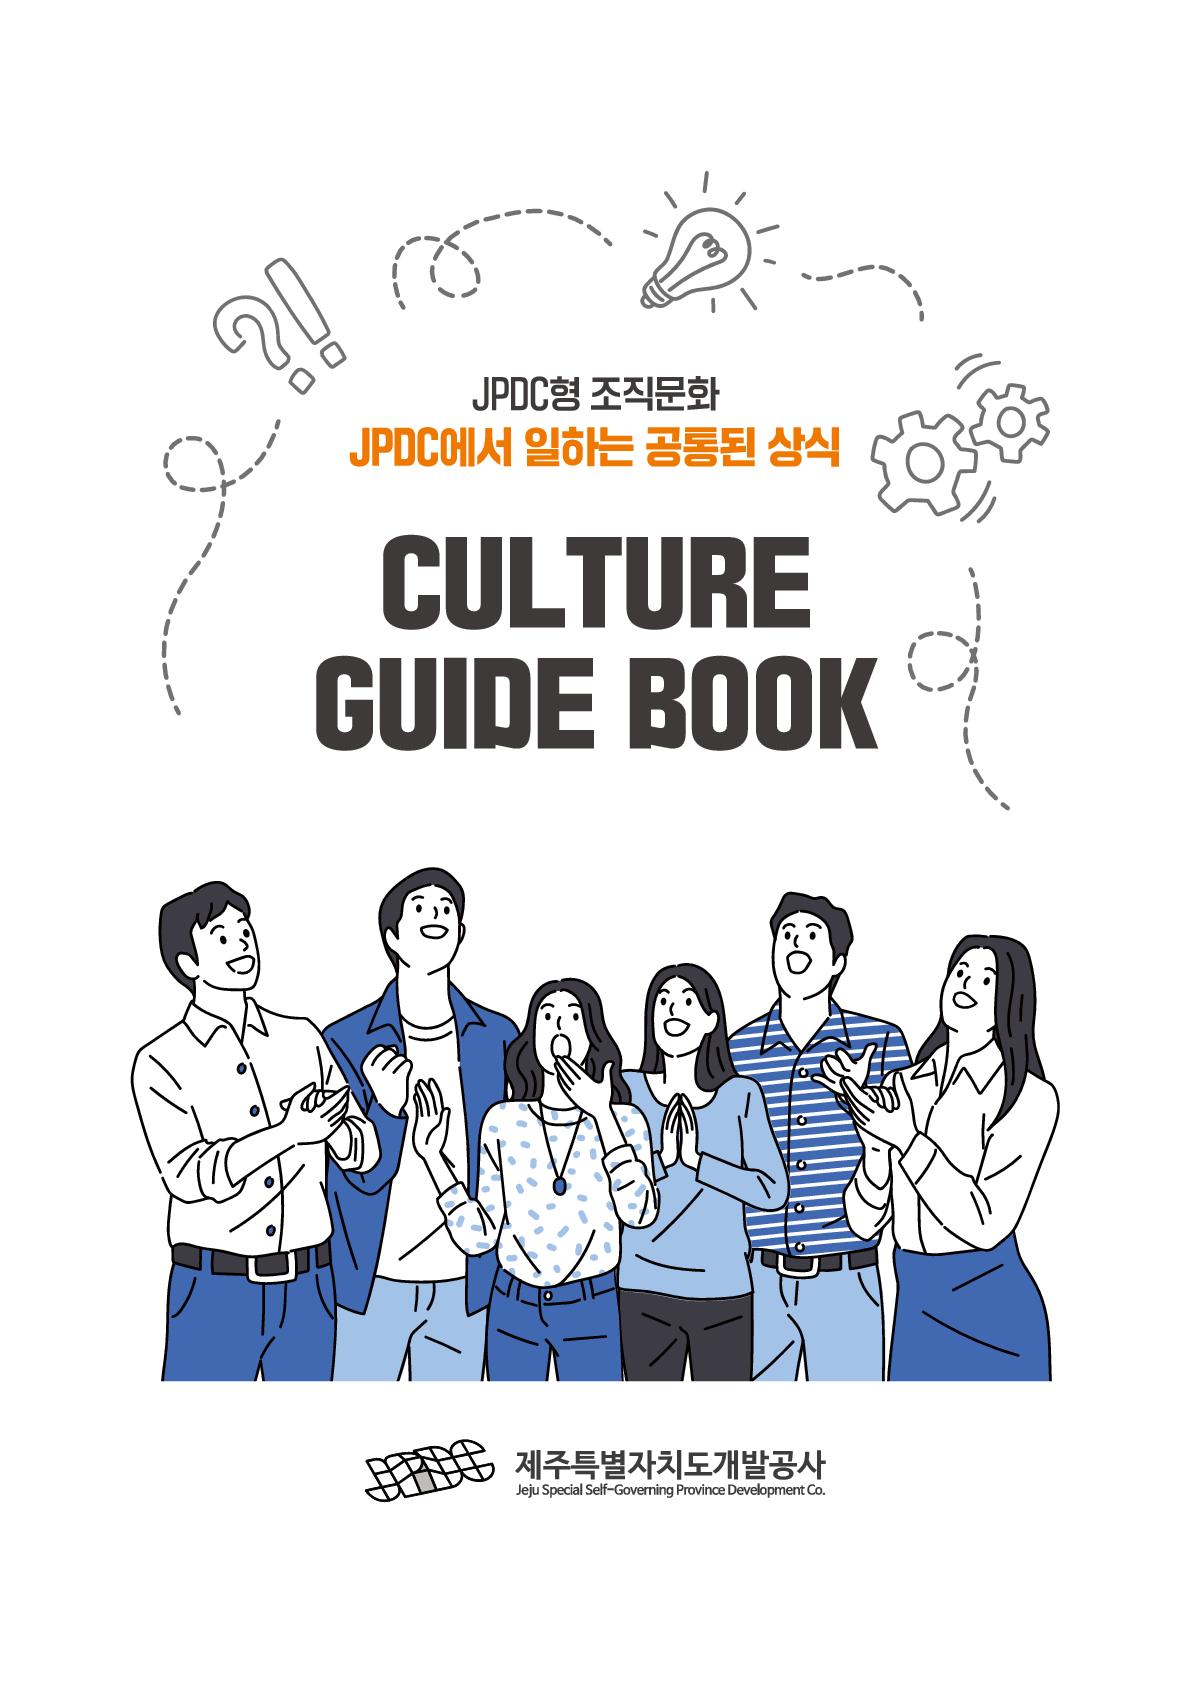 JPDC형 조직문화  JPDC에서 일하는 공통된 상식  Culture Guide Book